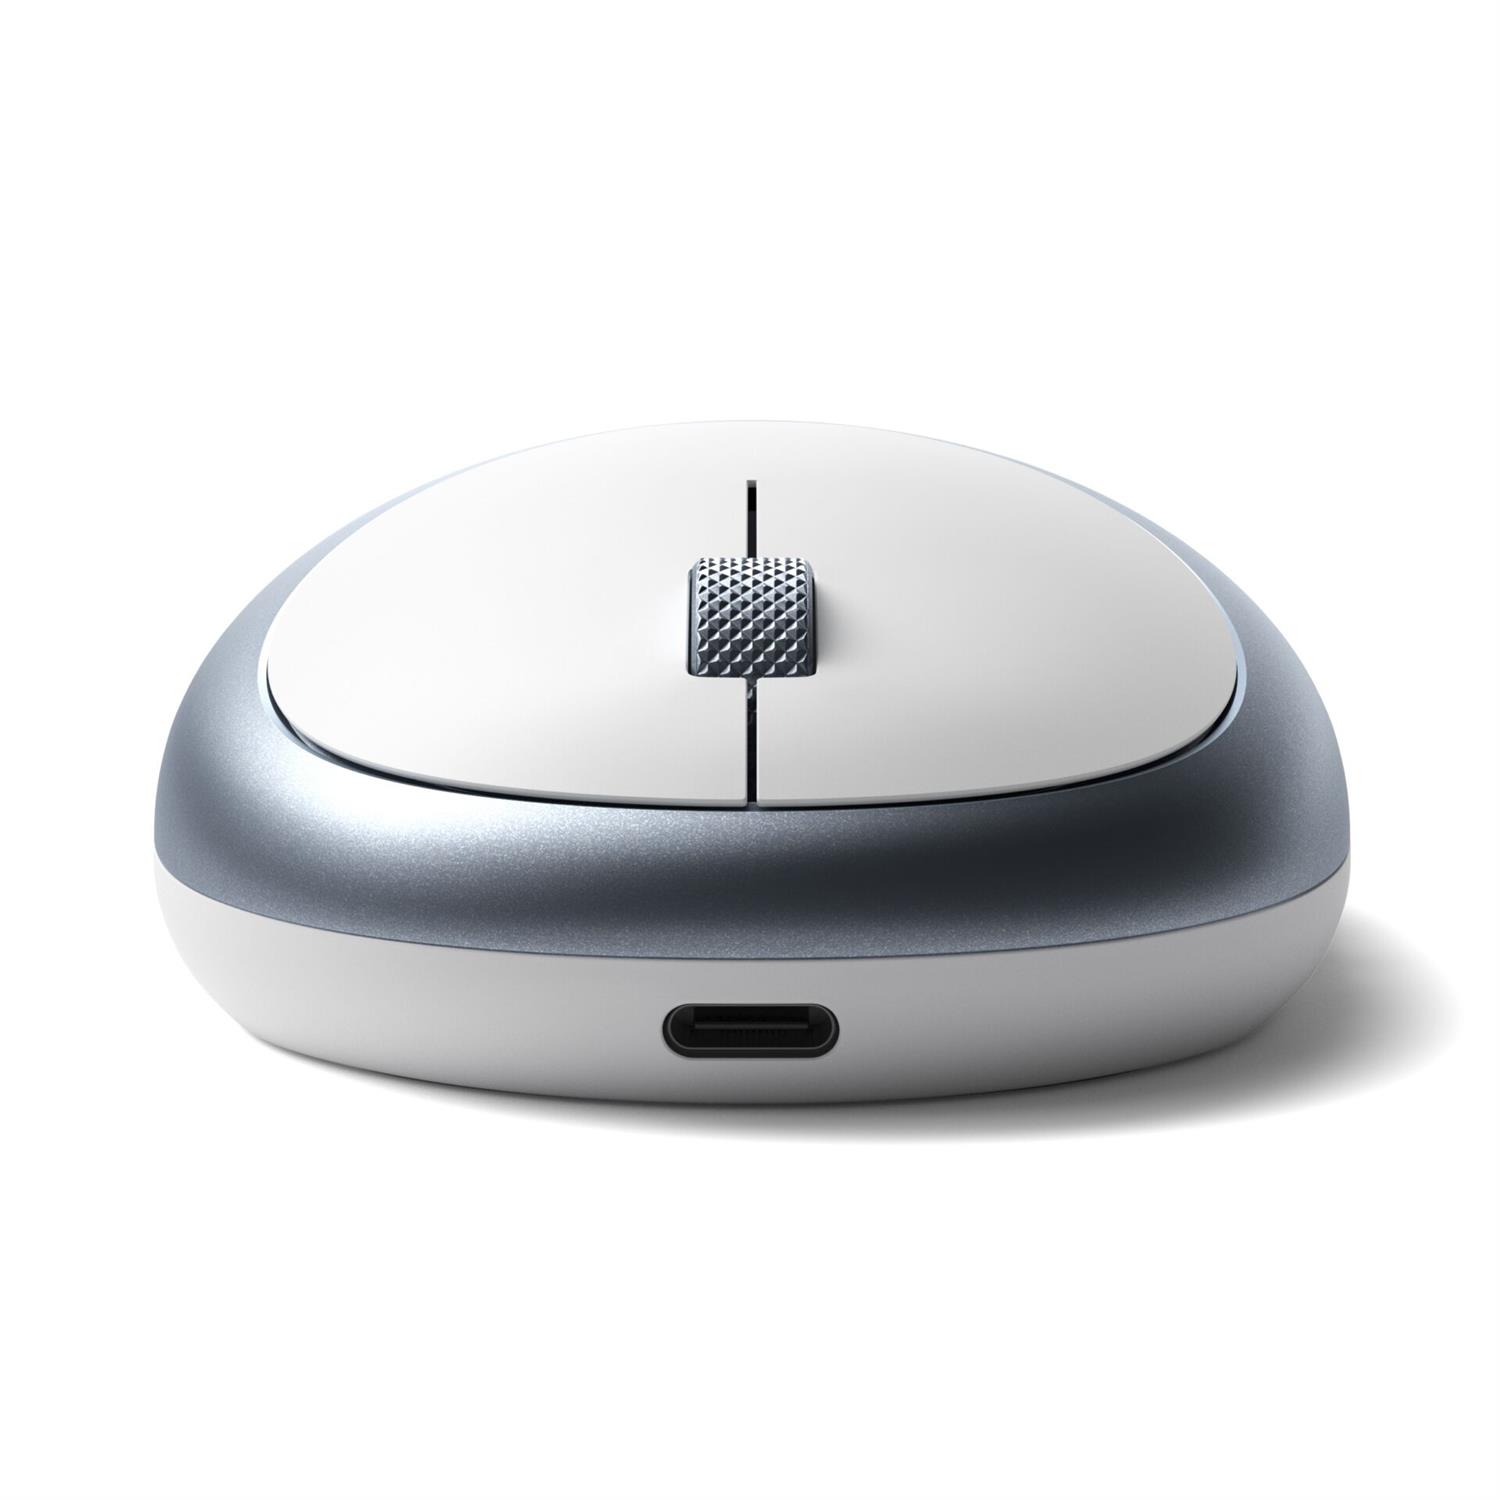 Satechi M1 Bluetooth Wireless Mouse - Blau